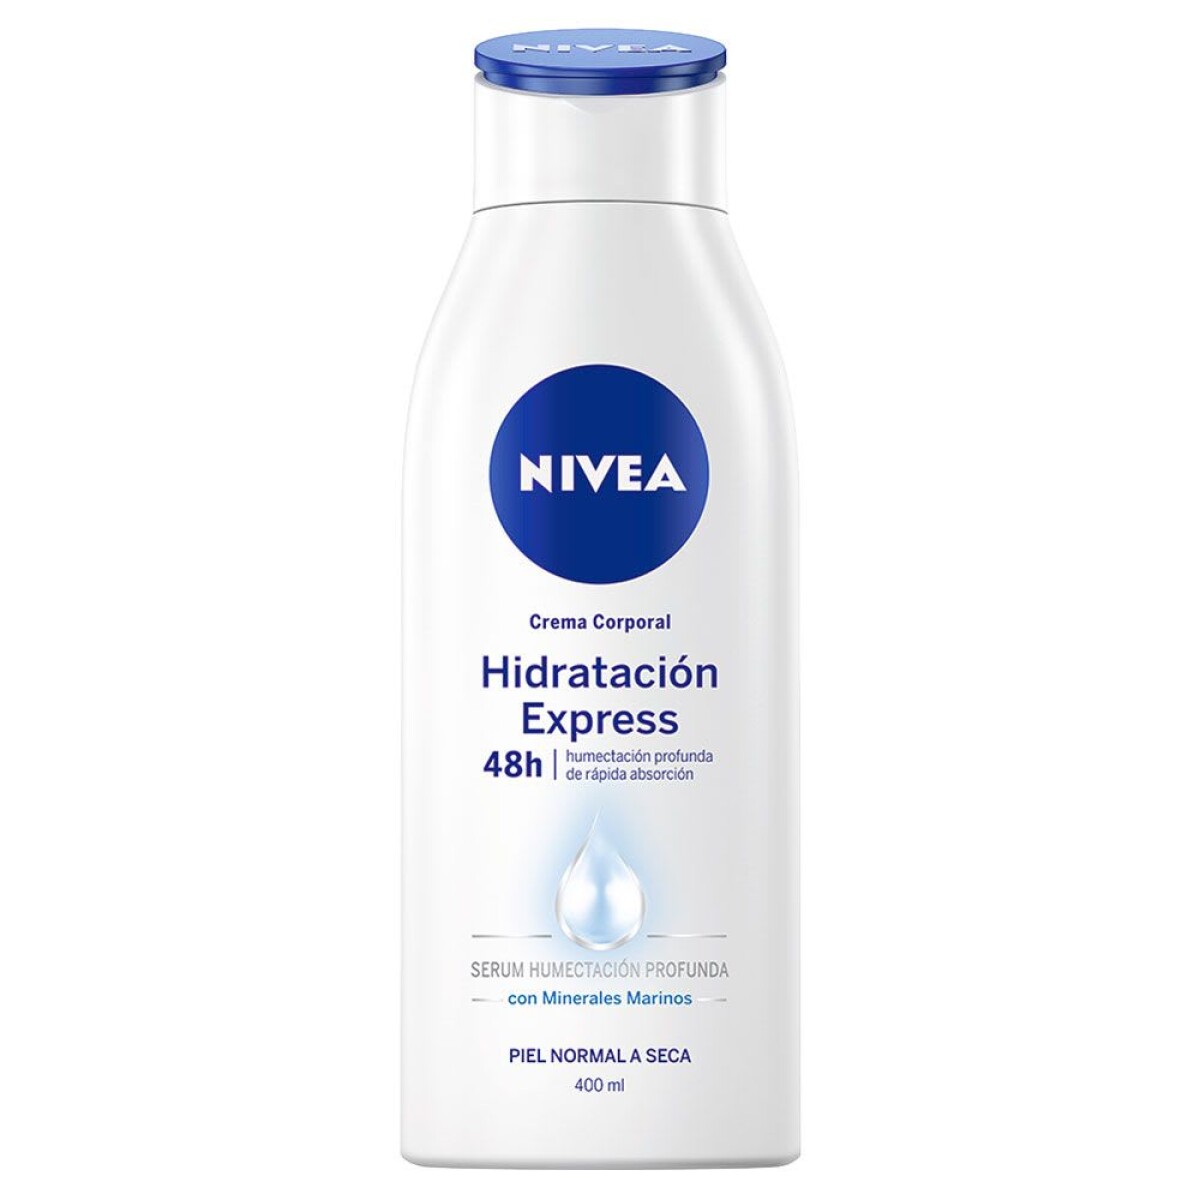 Crema Corporal NIVEA 200ml - Hidratación Express 